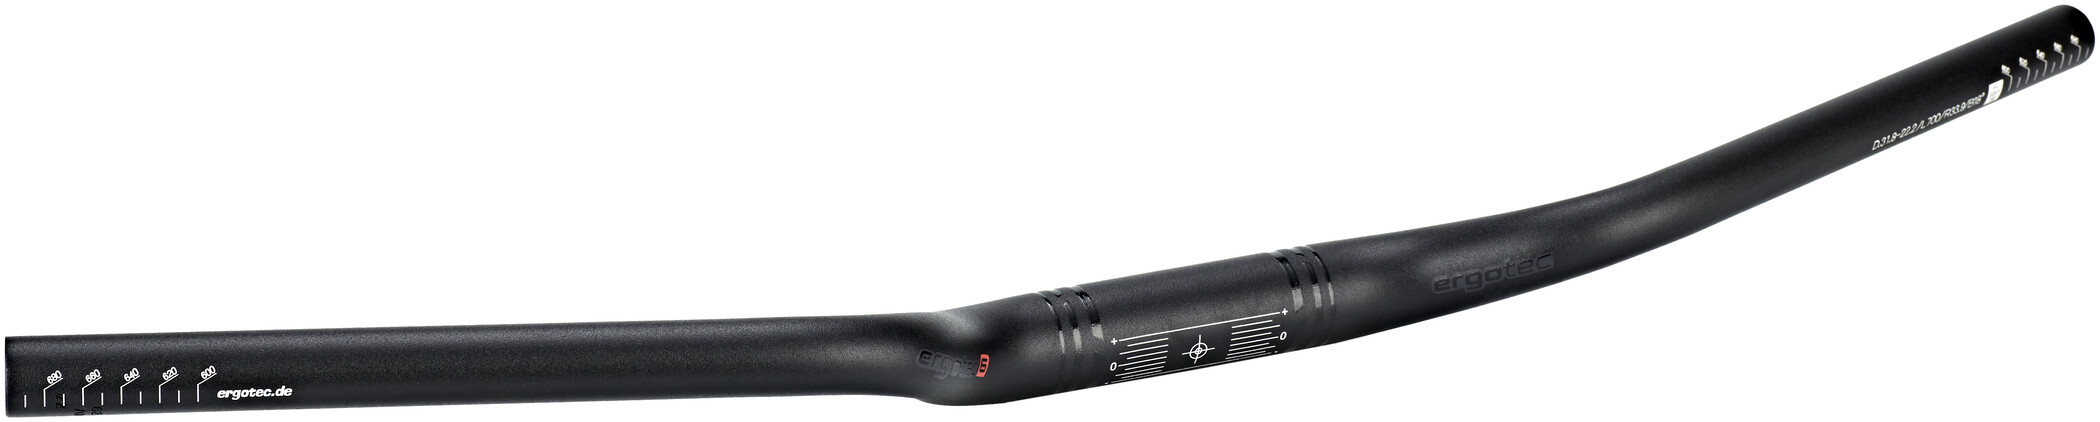 Humpert M-Bar Cykelstyr Alu L Ø31,8mm, sort | cykelstyr